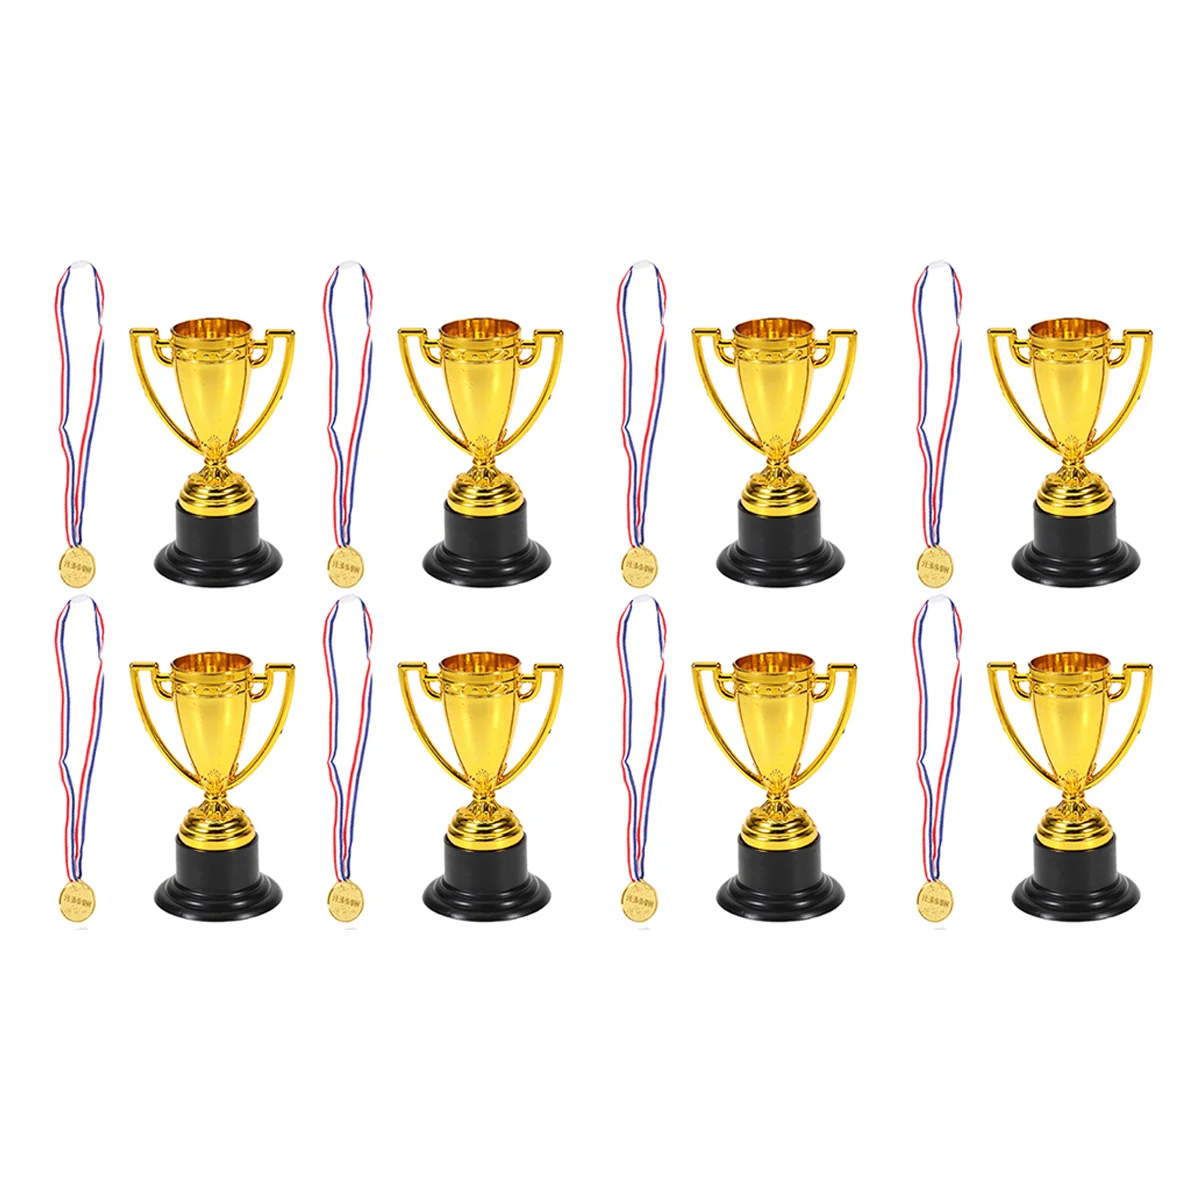 16Pcs Mini Plastic Reward Prizes Kids Small Medals Kids Gift Awards Trophy Golden (8xTrophies + 8xMedals)